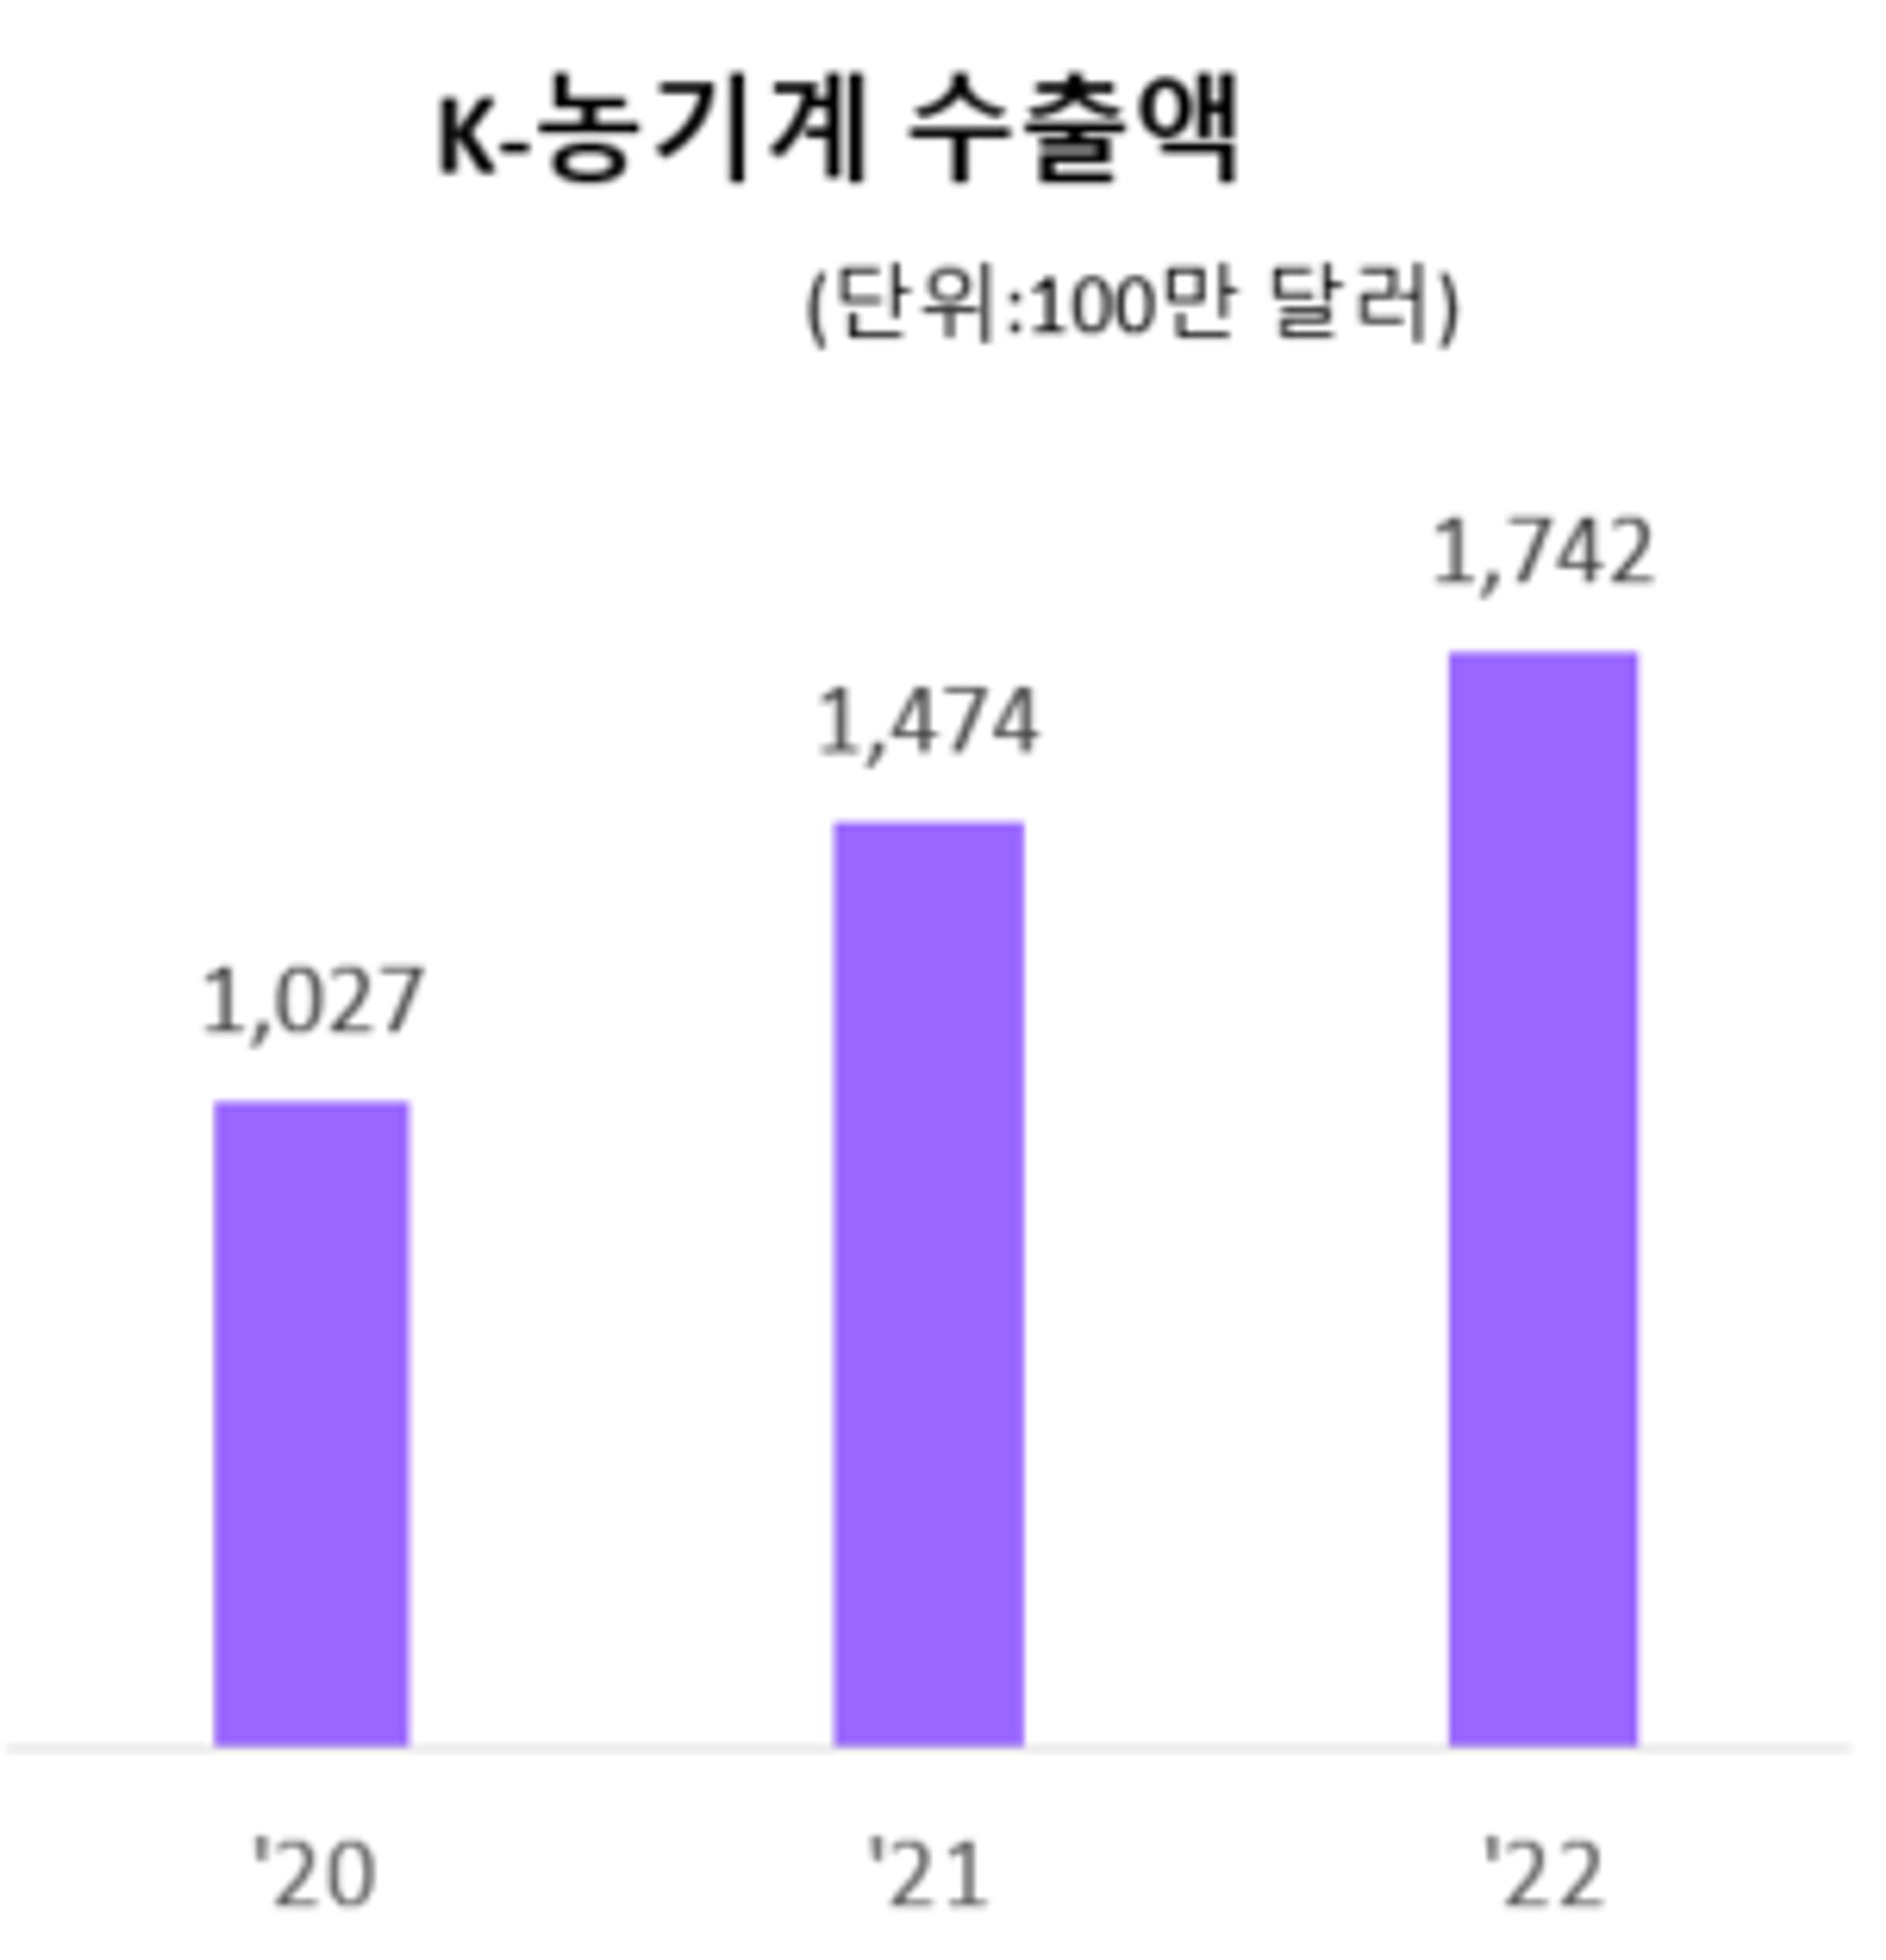 K-농기계 연도별 수출액 ⓒ농림축산식품부 보도자료(2023.03.21), 원더링